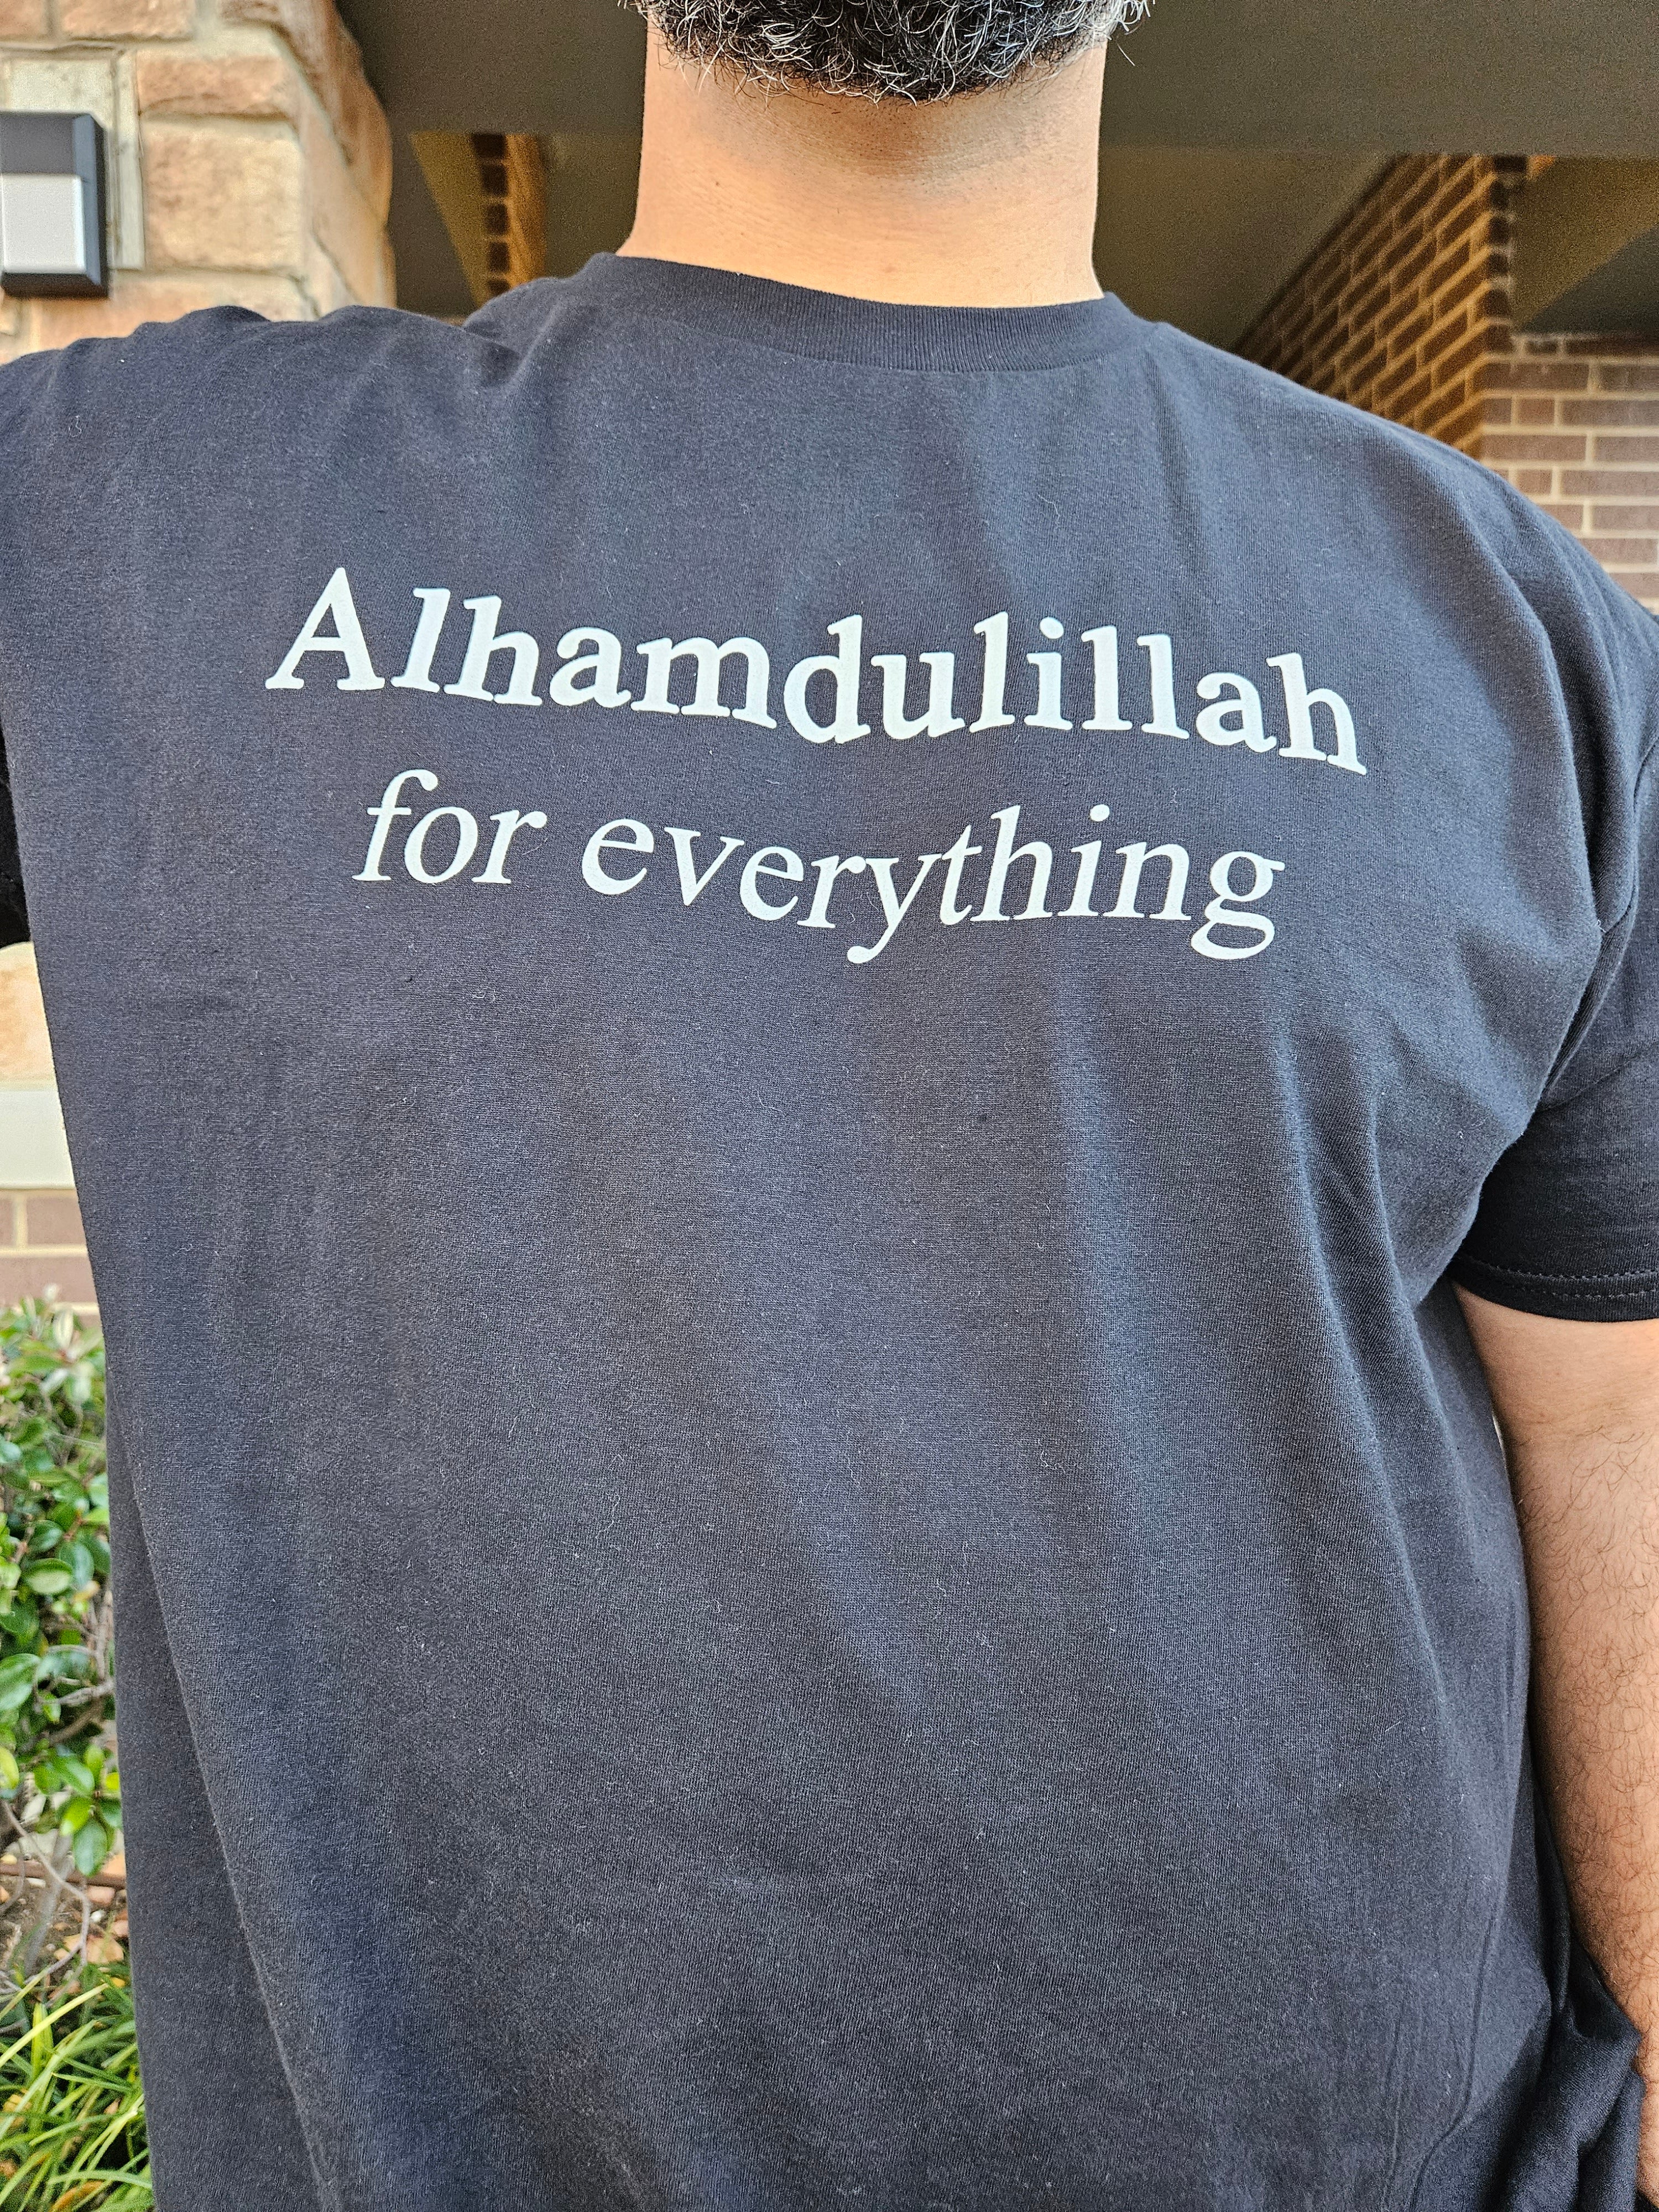 Alhamdulilah (Praise Be to God) T-shirt - Habibi Heritage